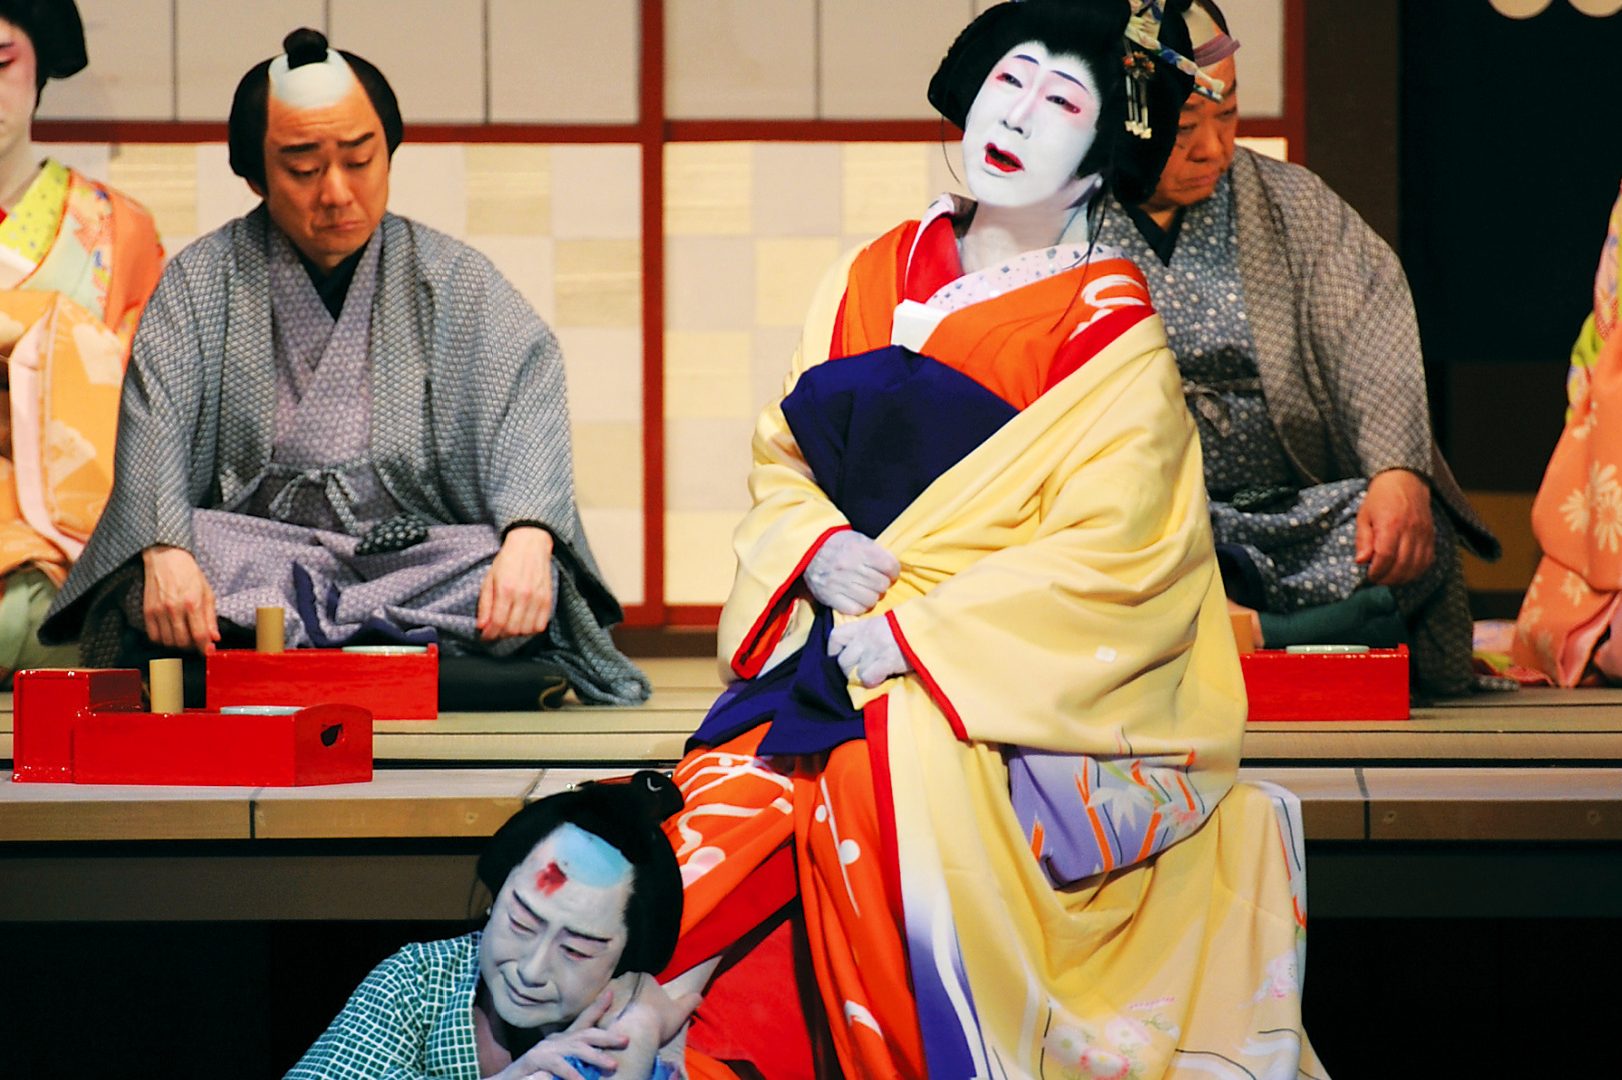 The wonder of kabuki theater - The Spectator World